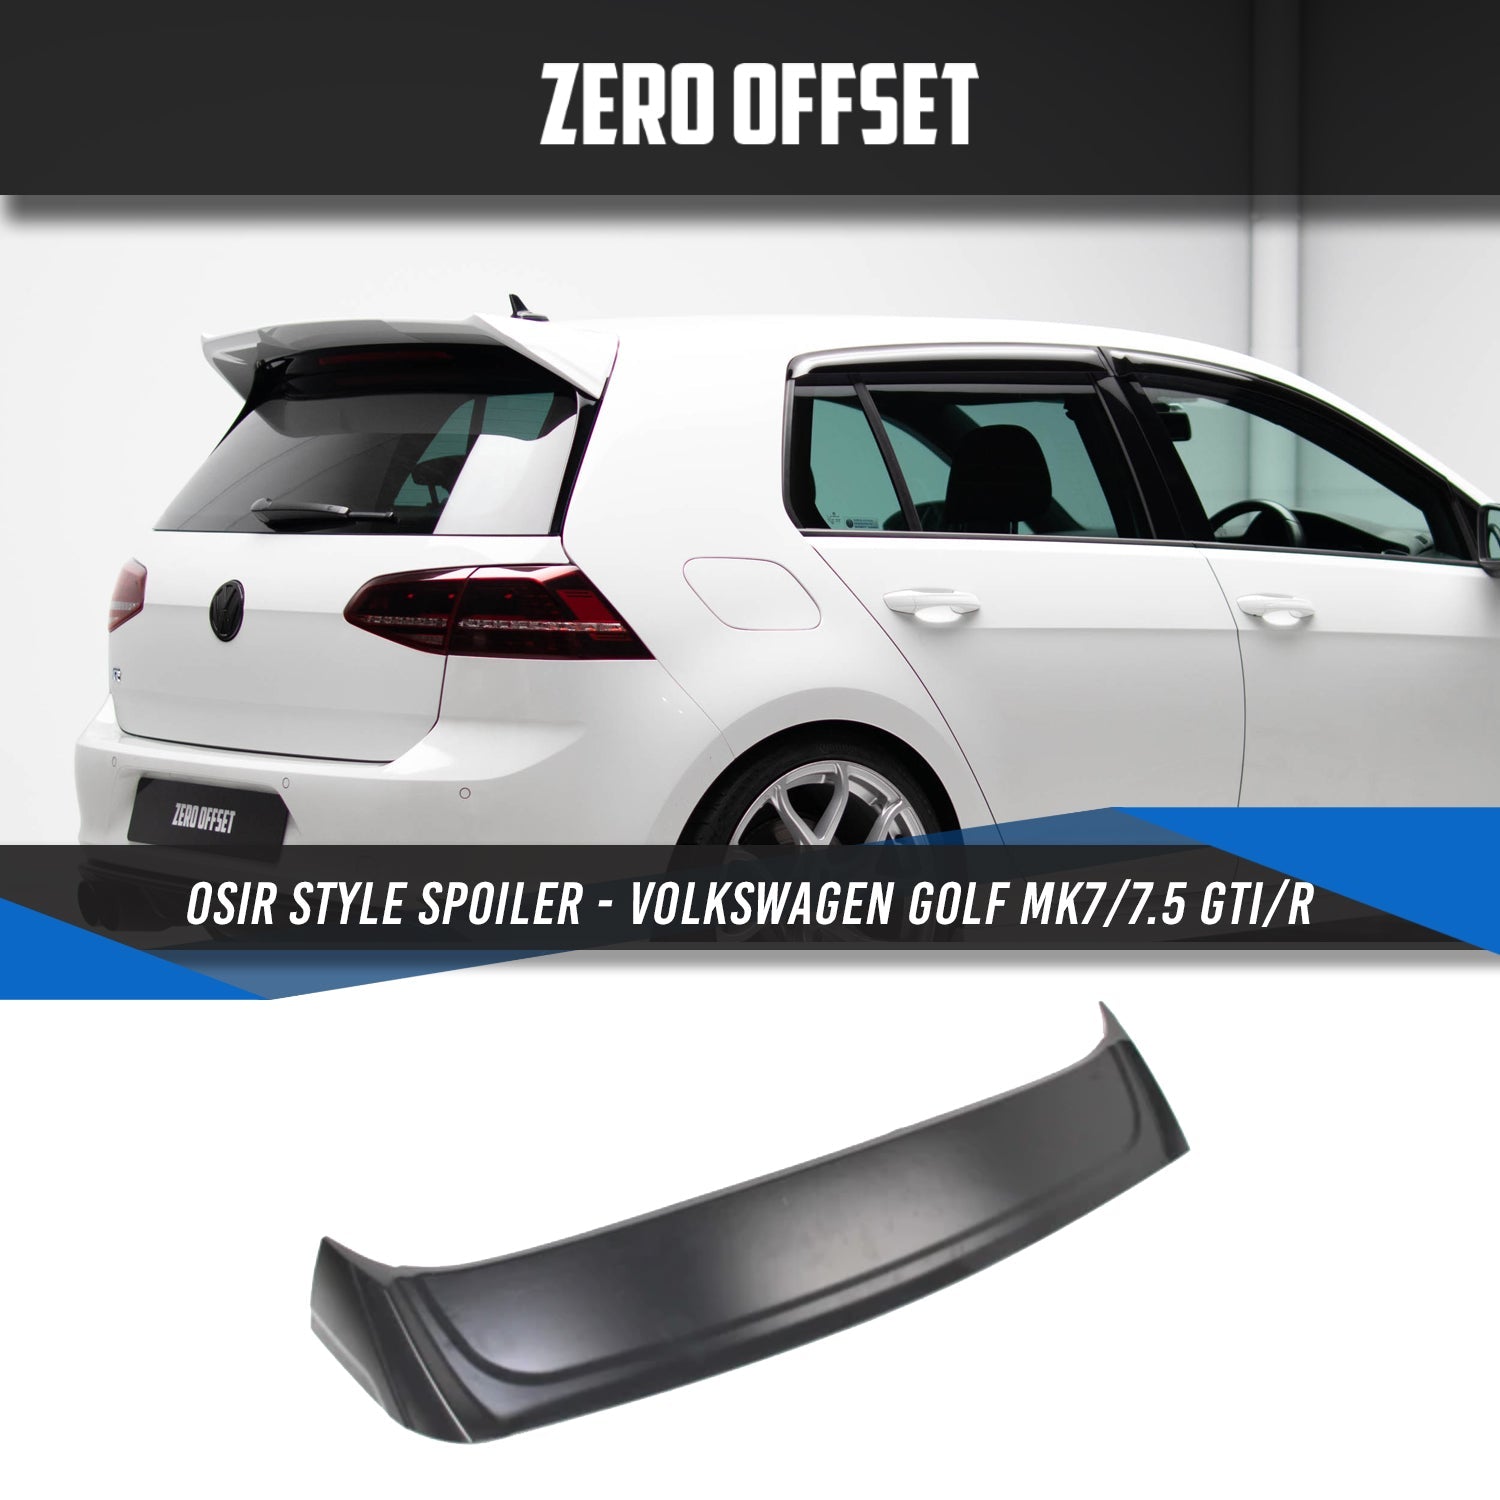 Zero Offset OSIR Style Spoiler for Volkswagen Golf MK7/7.5 GTI/R